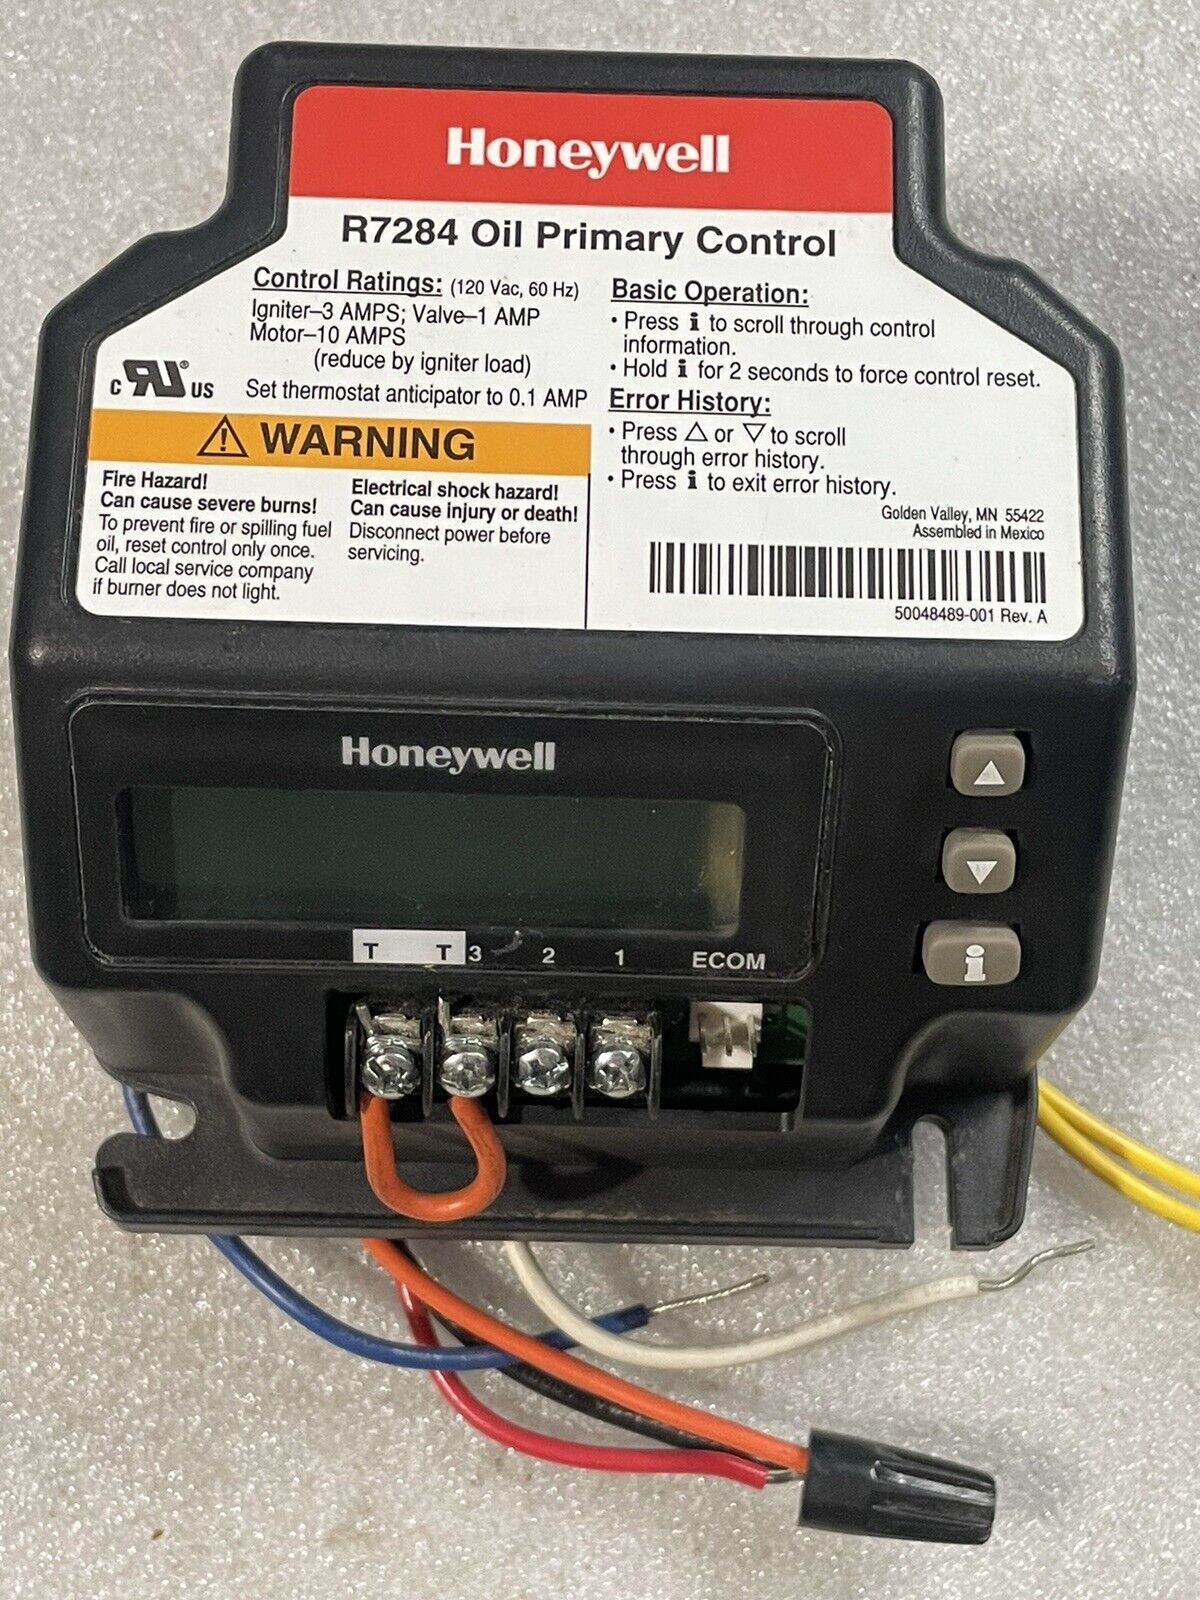 Honeywell R7284U-1004 Universal Oil Primary Control